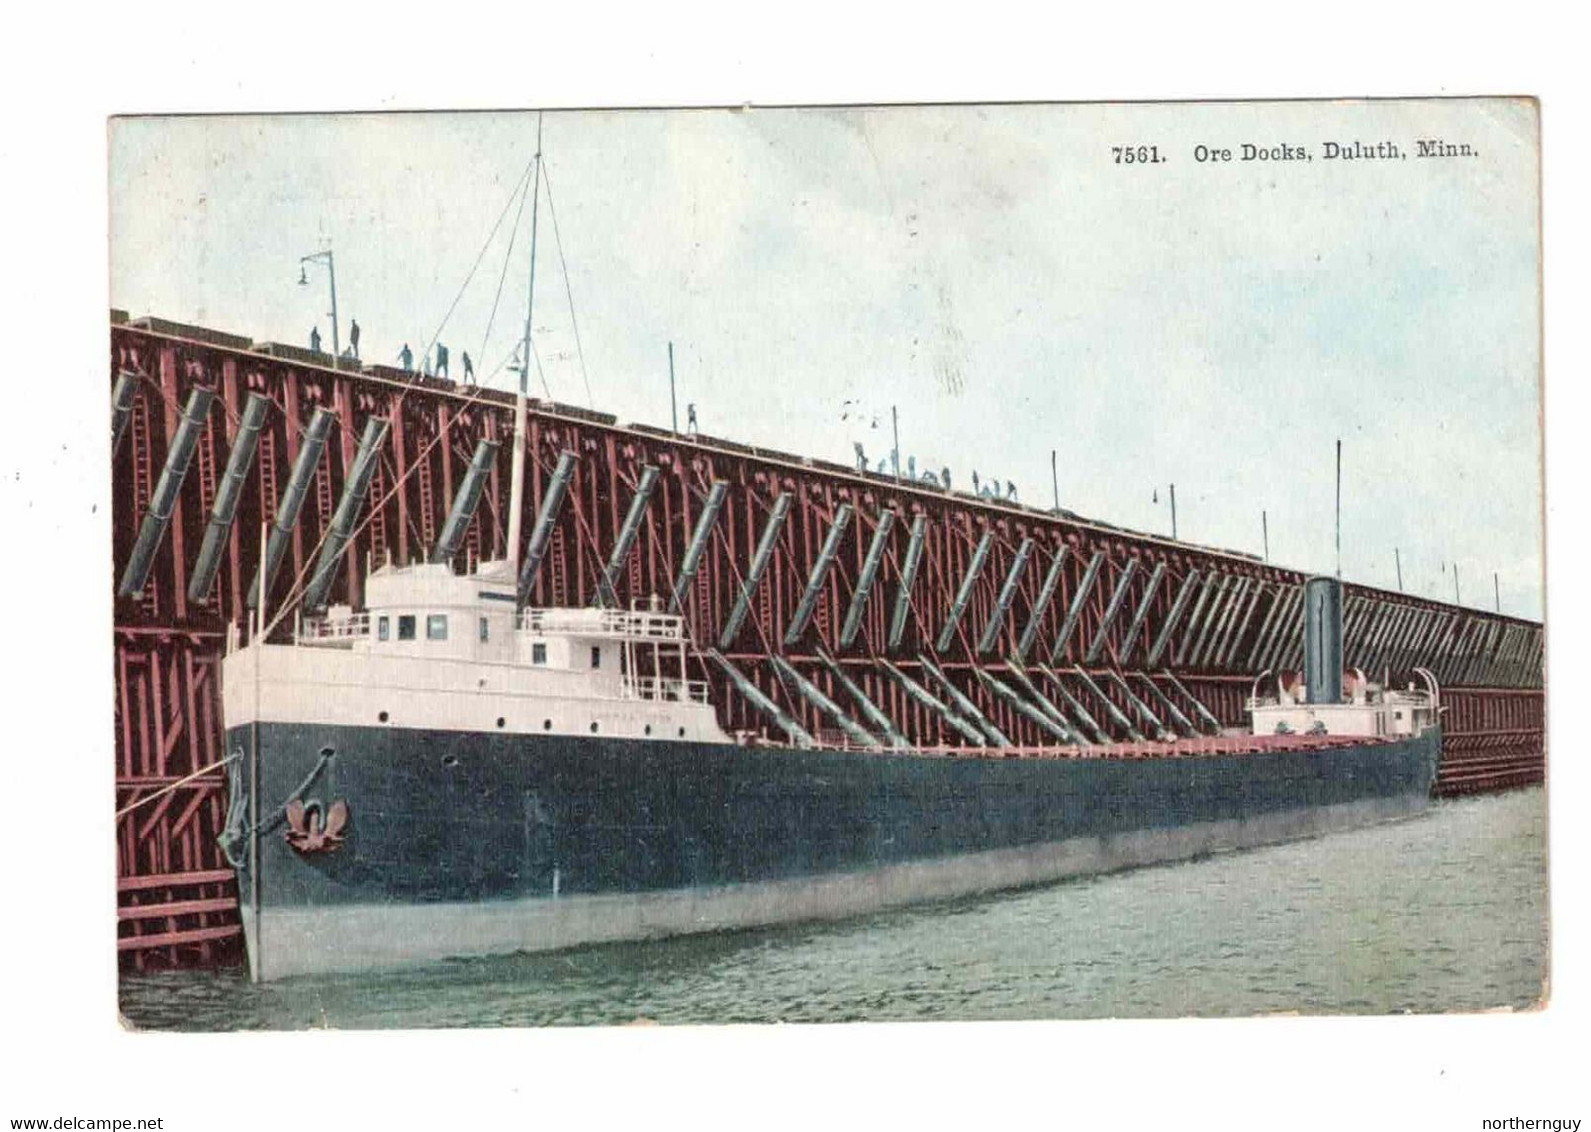 Duluth, Minnesota, USA, "7561 Ore Docks, Duluth, Minn.", Steamship At The Docks, 1912 Postcard - Duluth